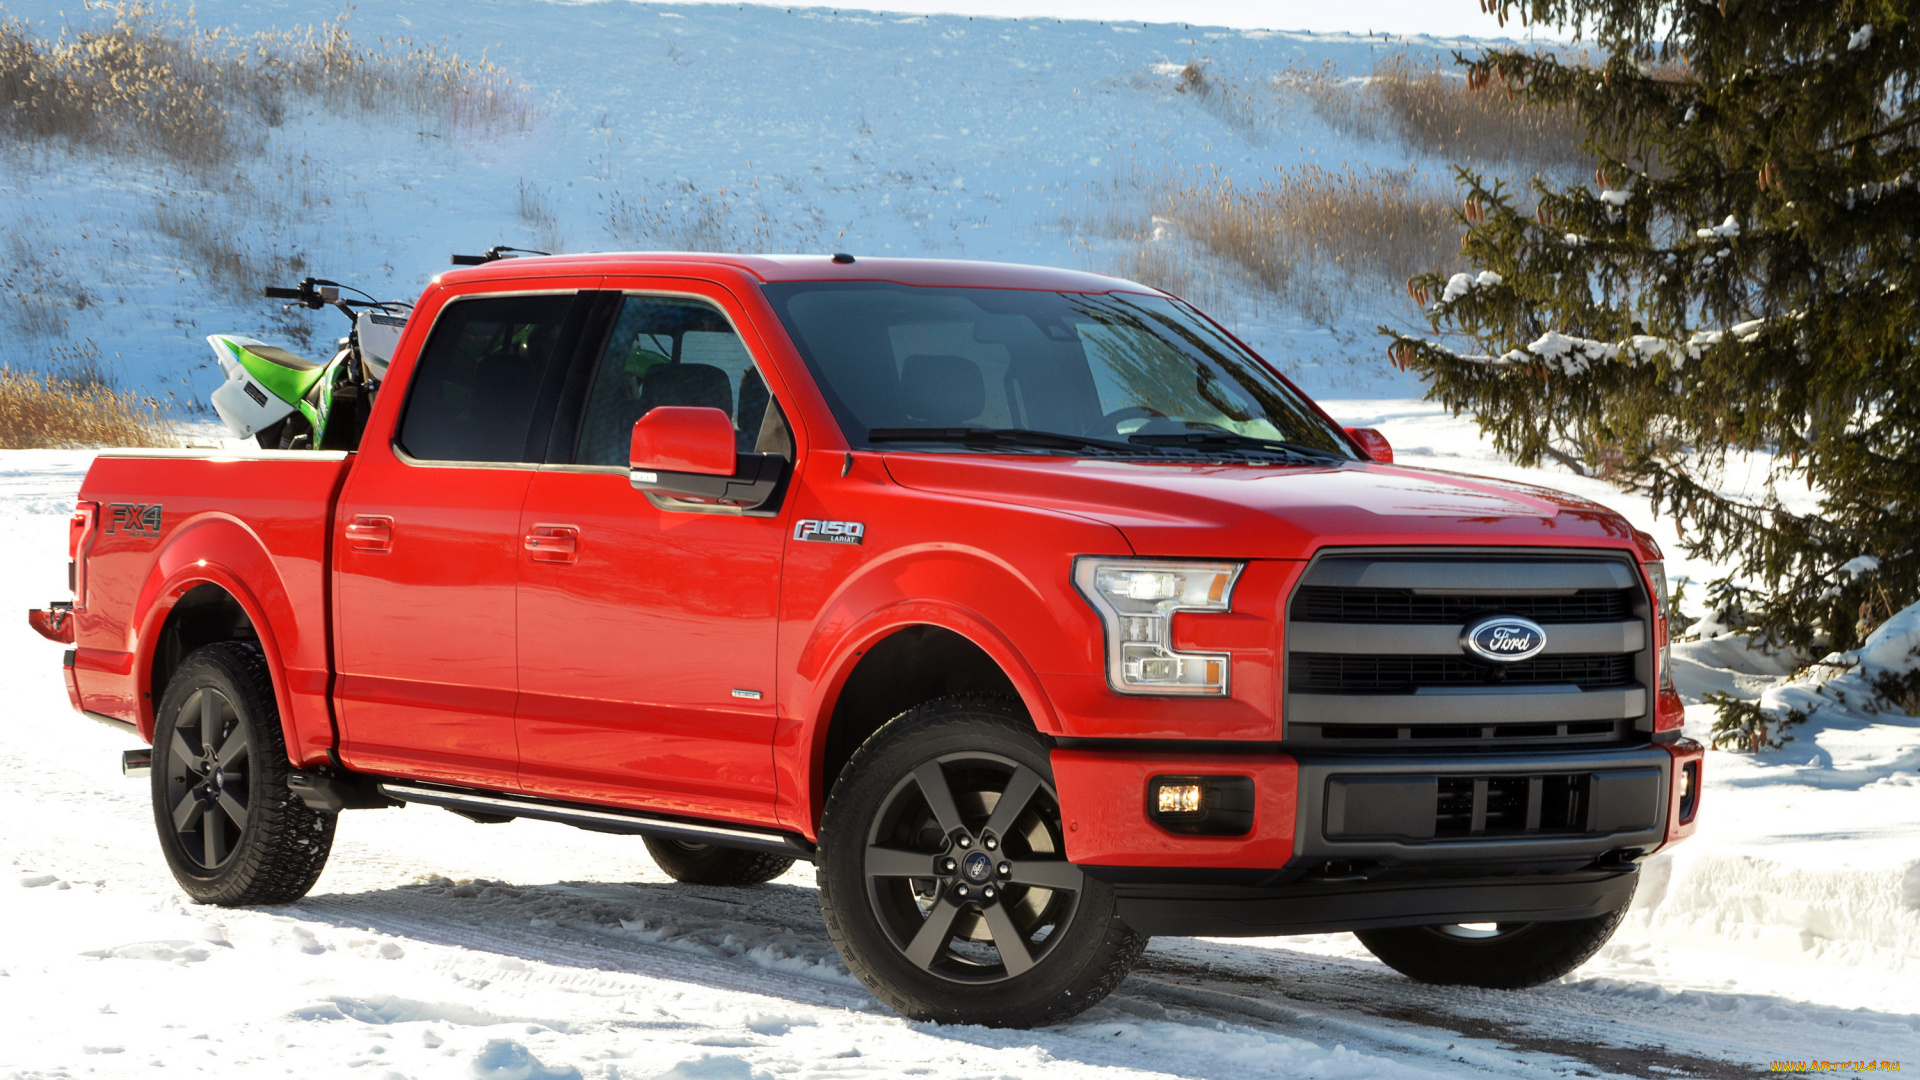 2014, ford, f-150, автомобили, ford, красный, зима, снег